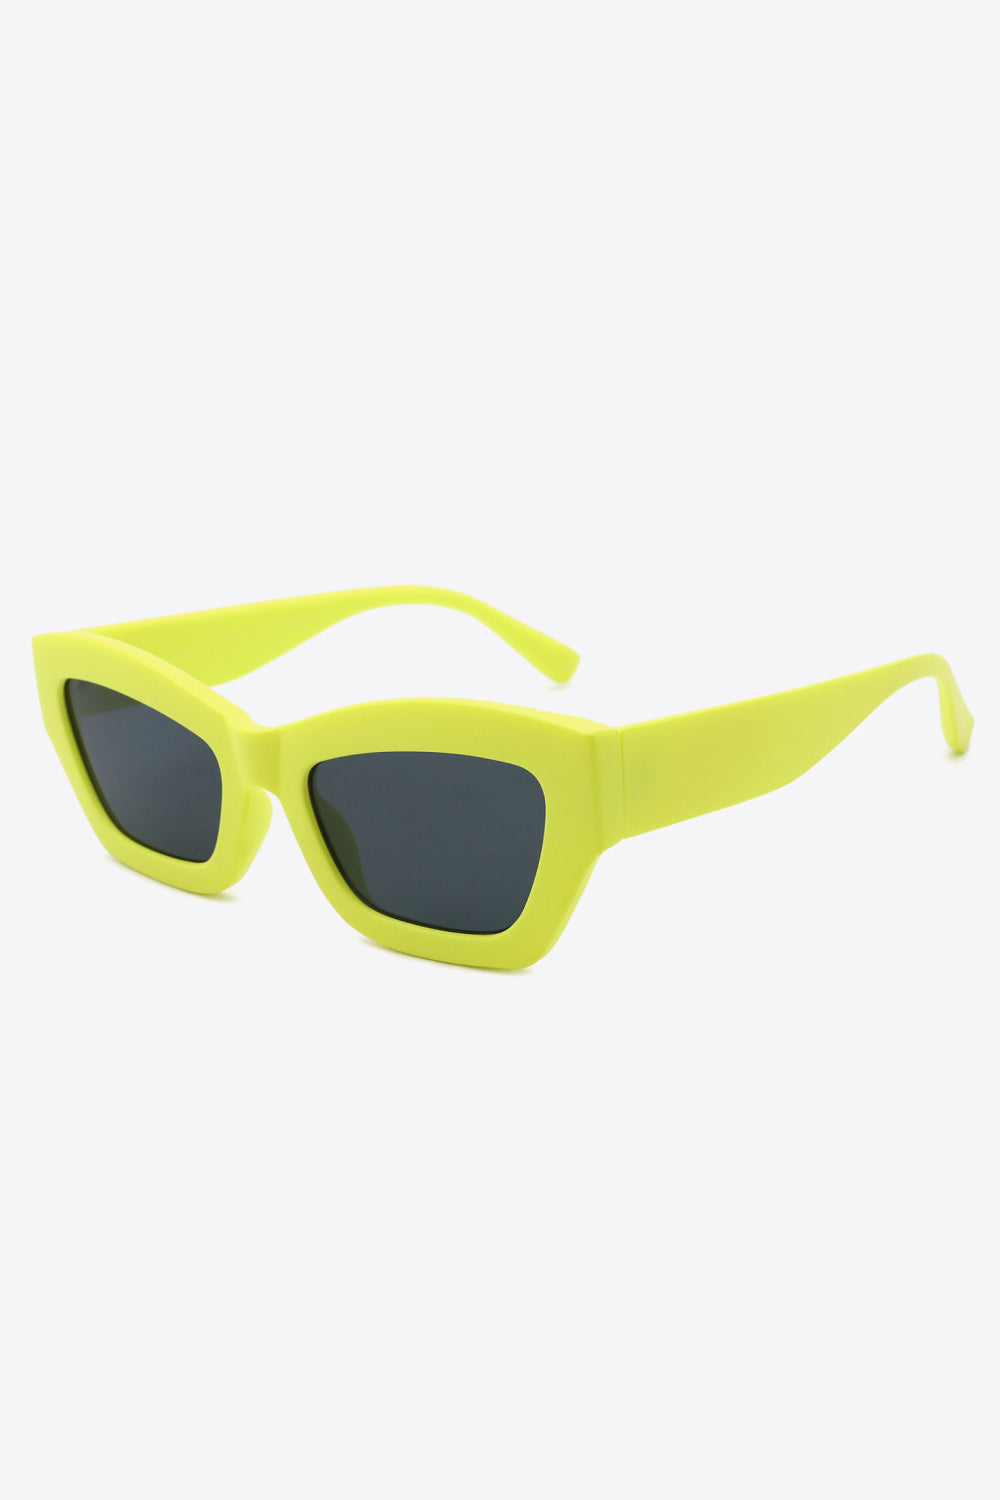 Classic Wayfarer Polycarbonate UV400 Sunglasses in Lemon Yellow